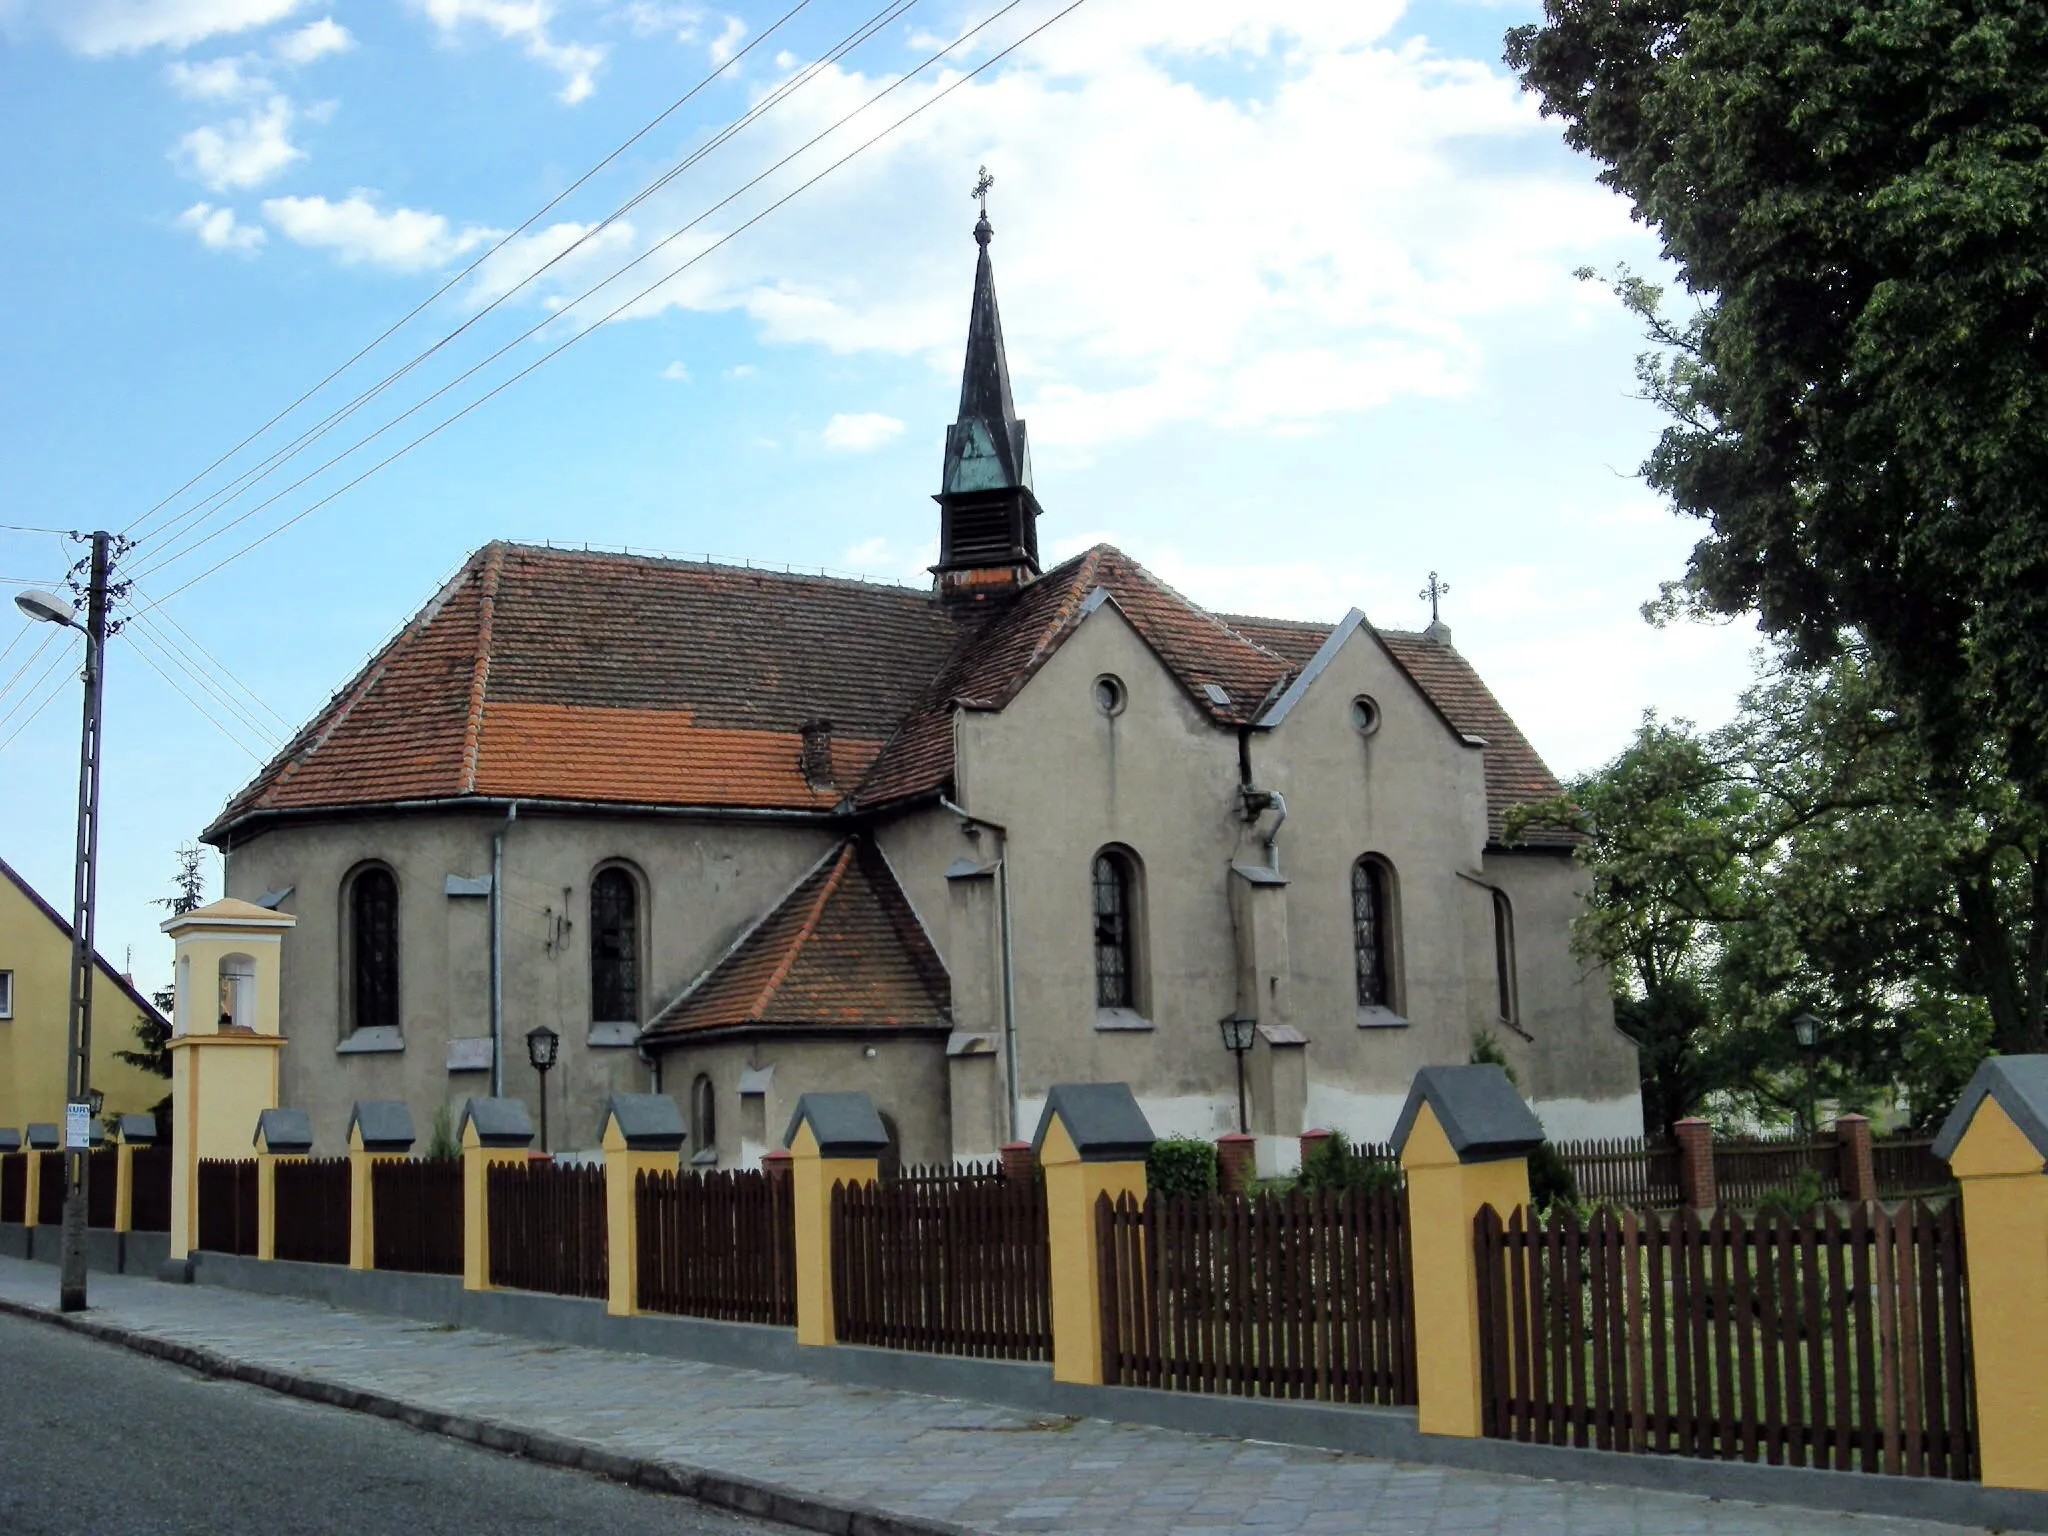 Photo showing: The church in Mieścisko, Poland.